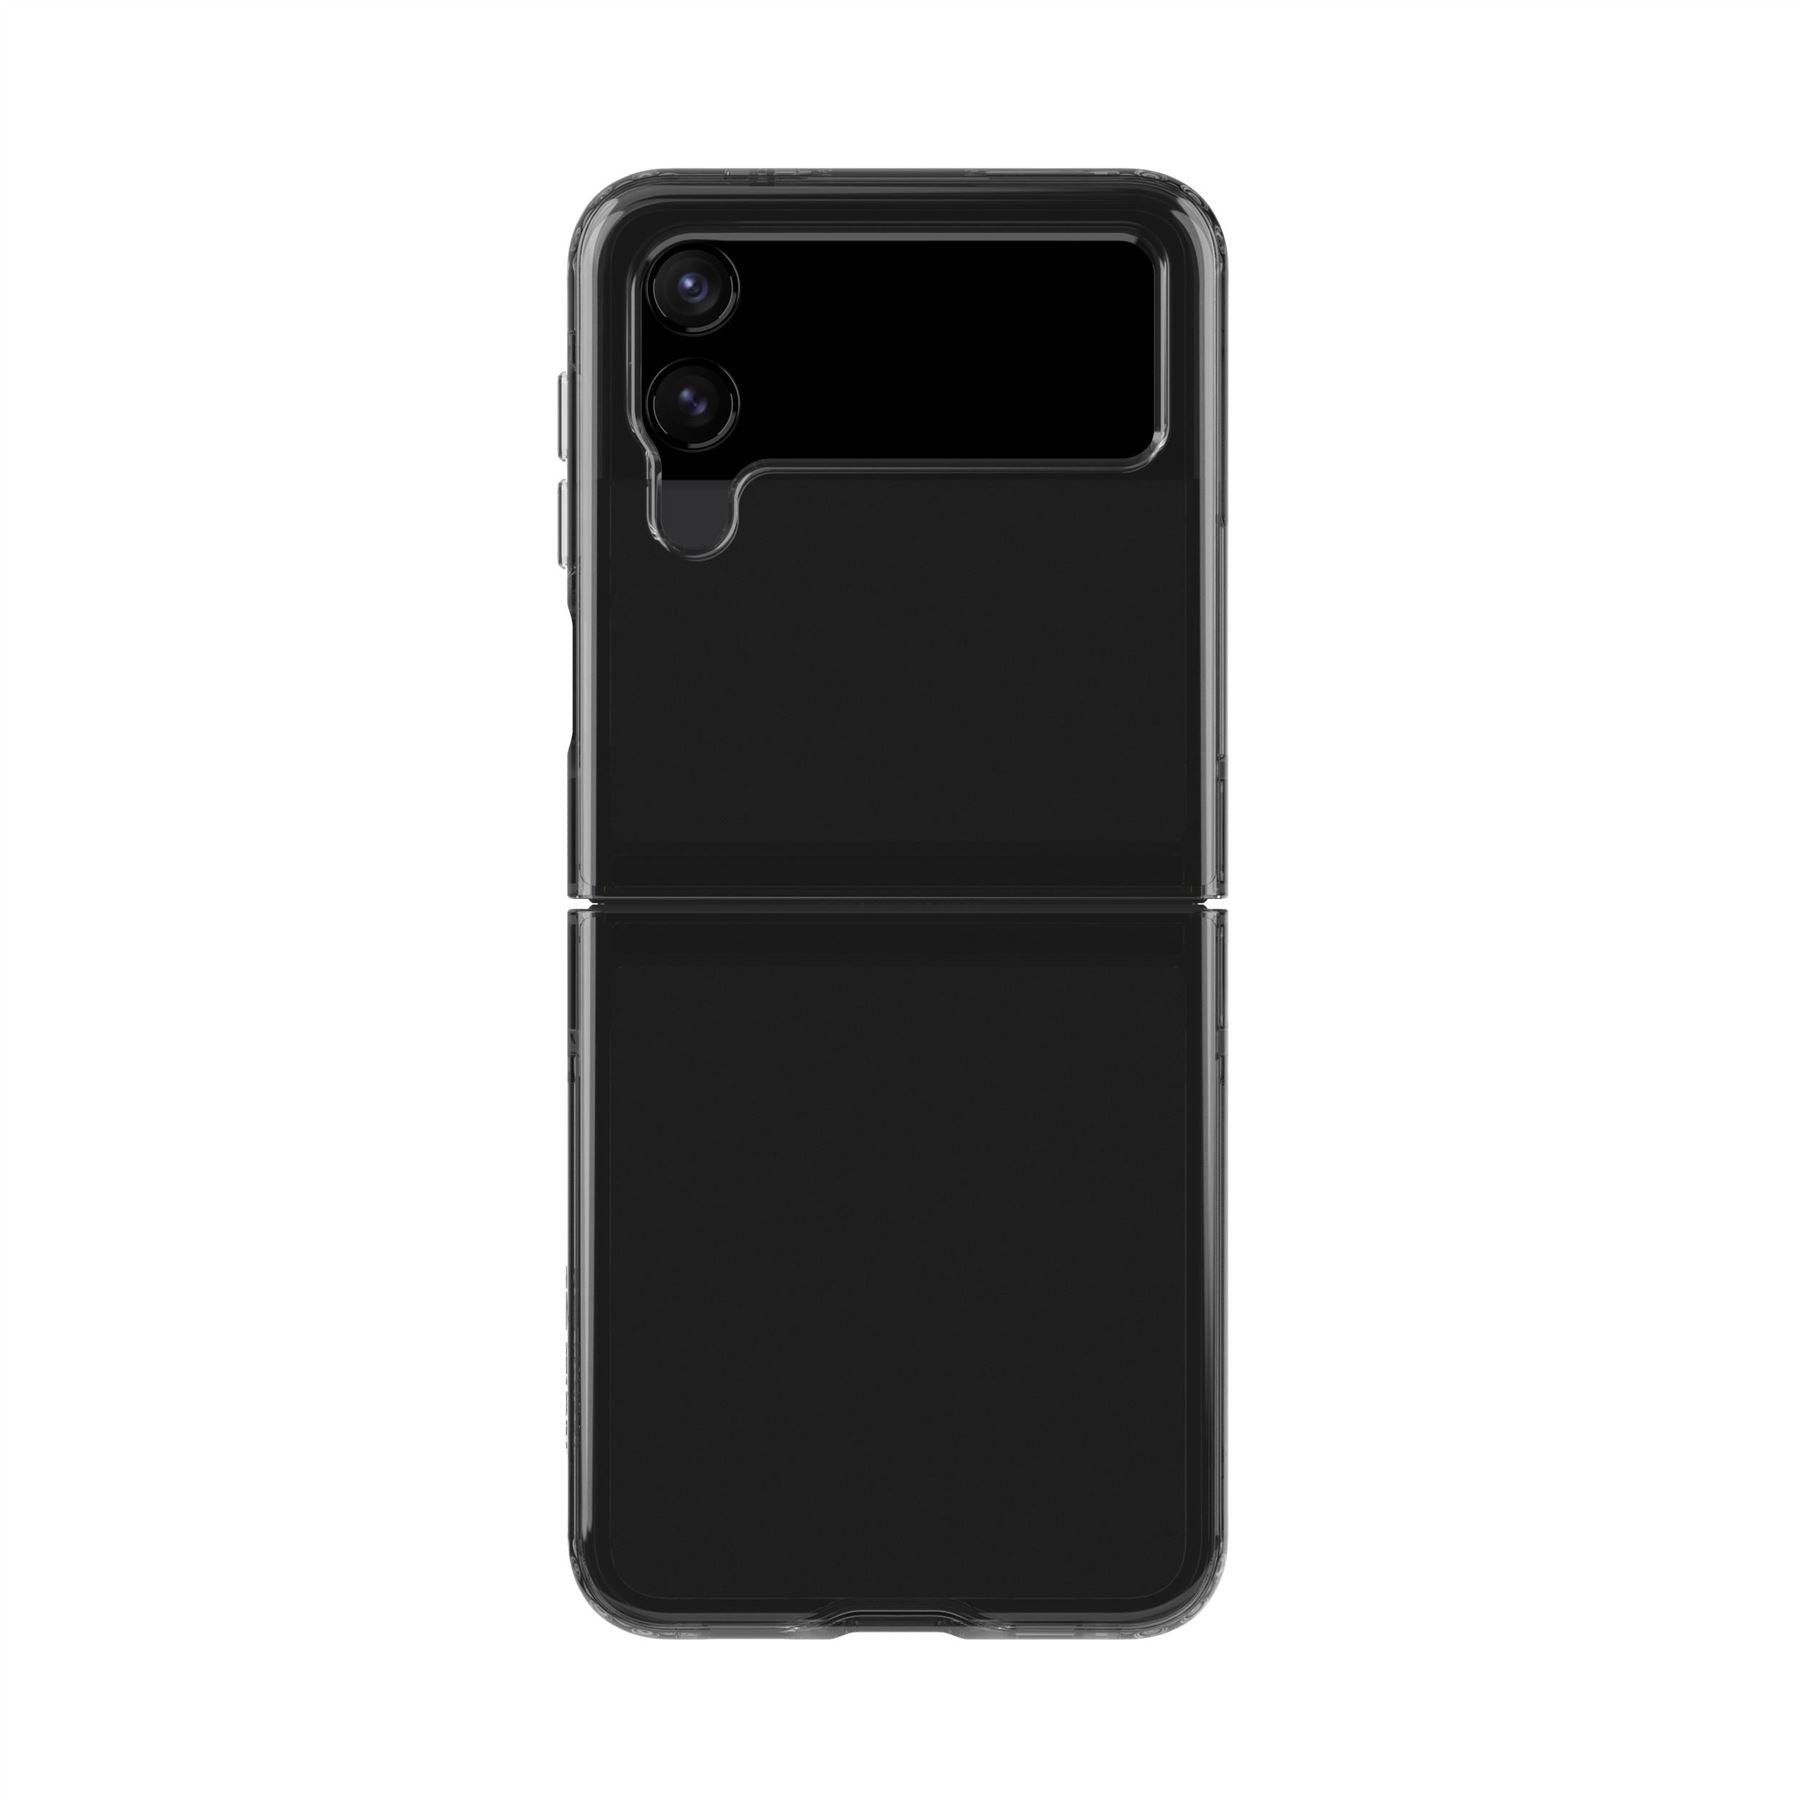 Tech21 T21-9556 mobile phone case 17 cm (6.7") Cover Grey